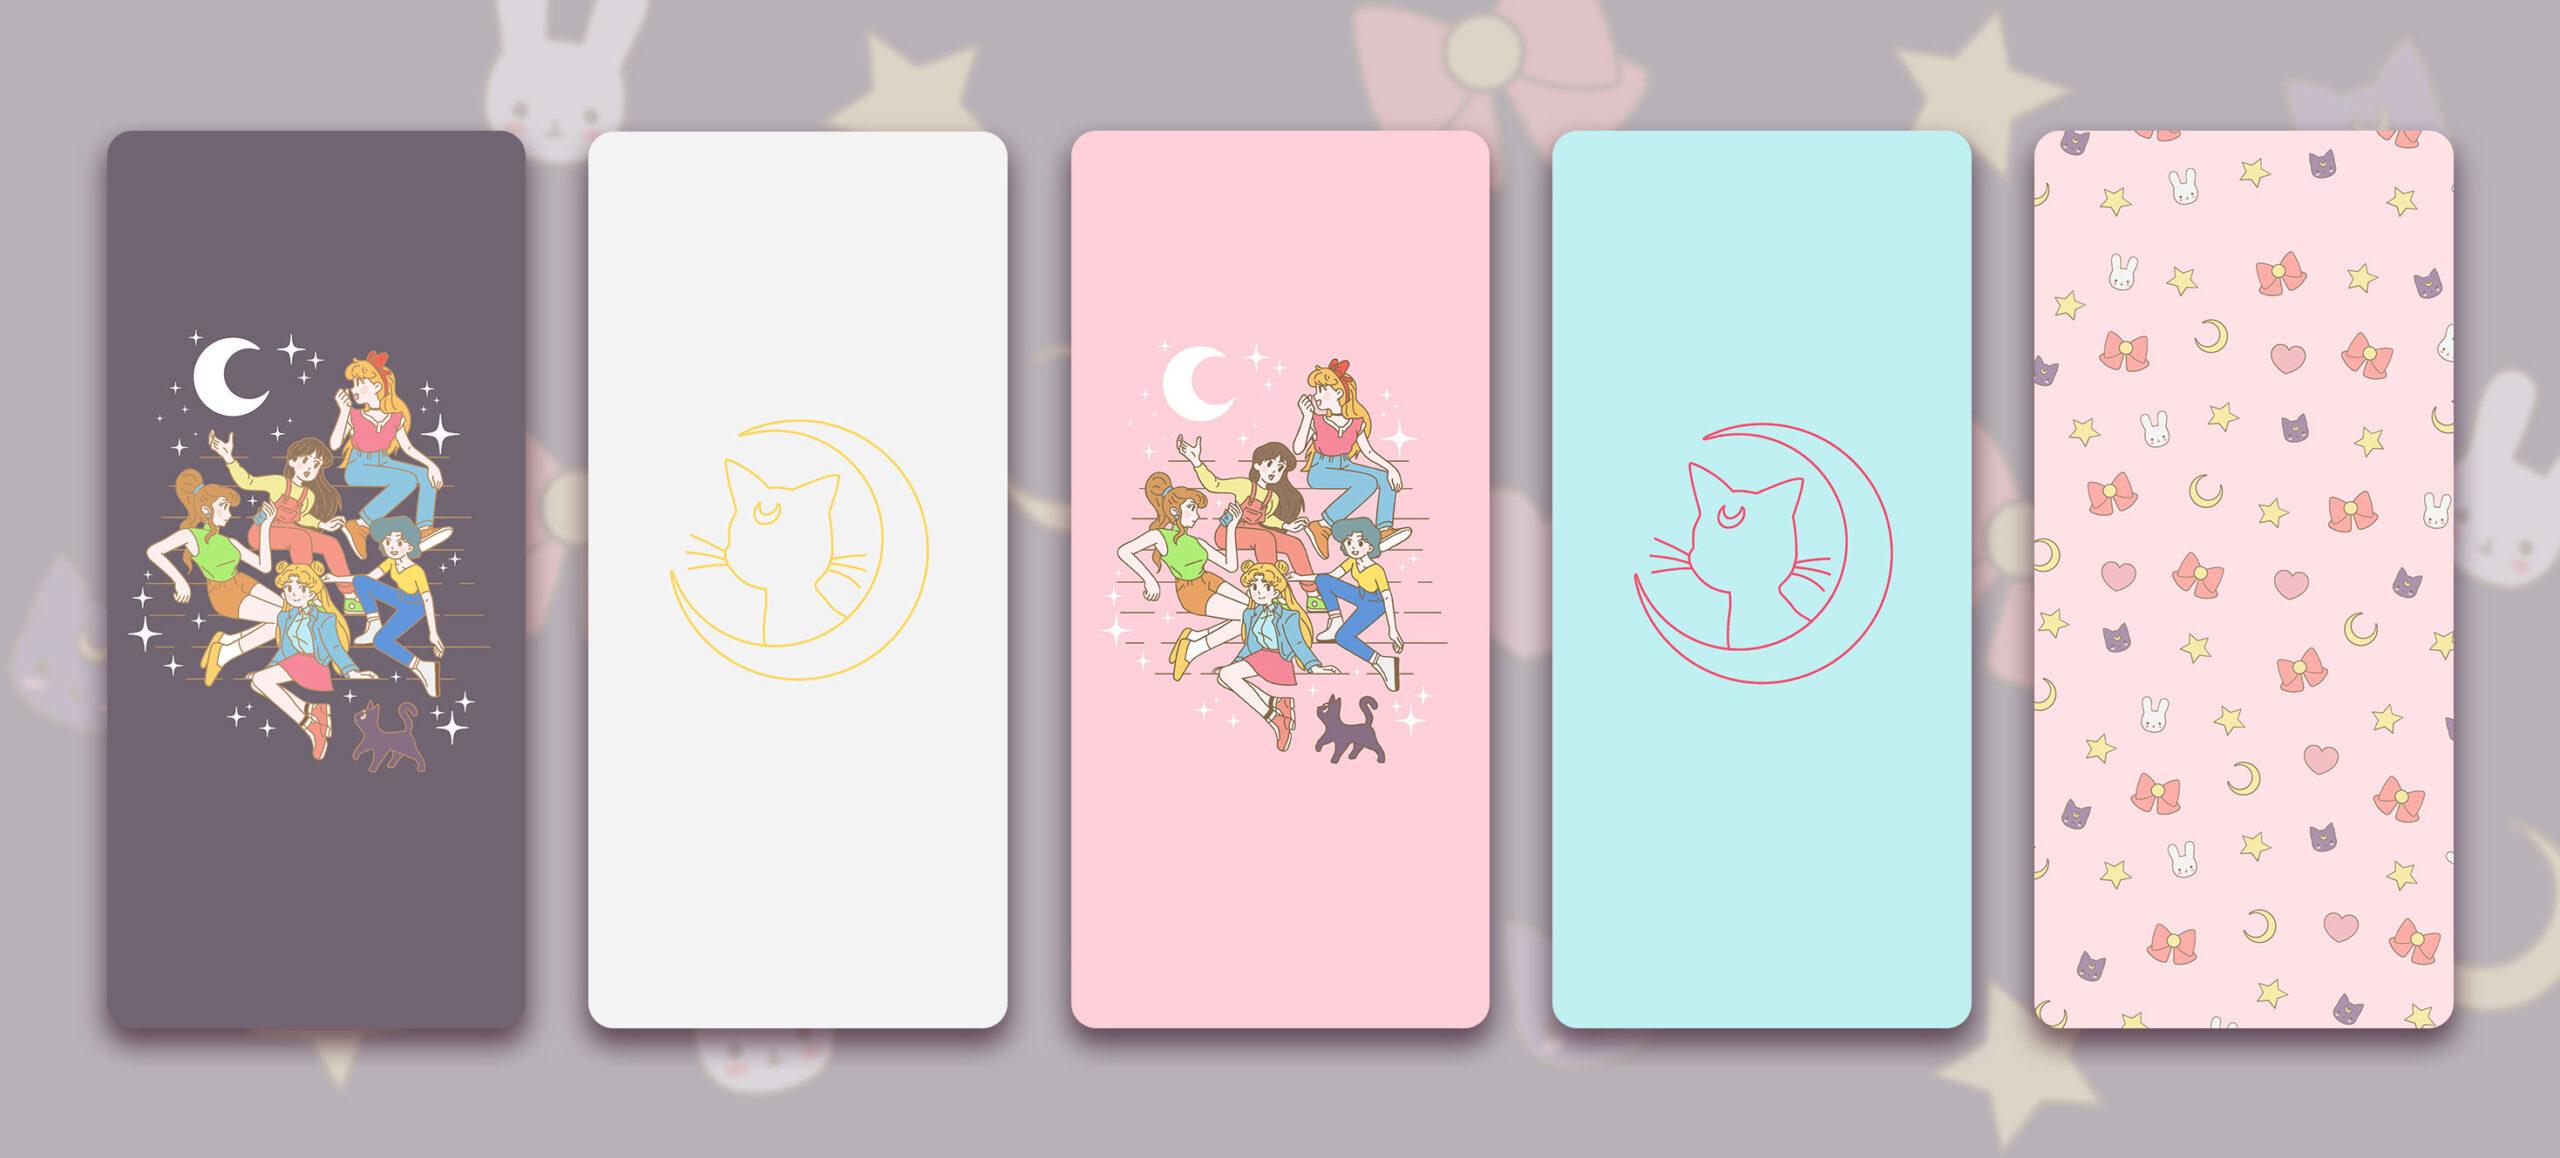 Sailor Moon Aesthetic App Icons Ios Pastel